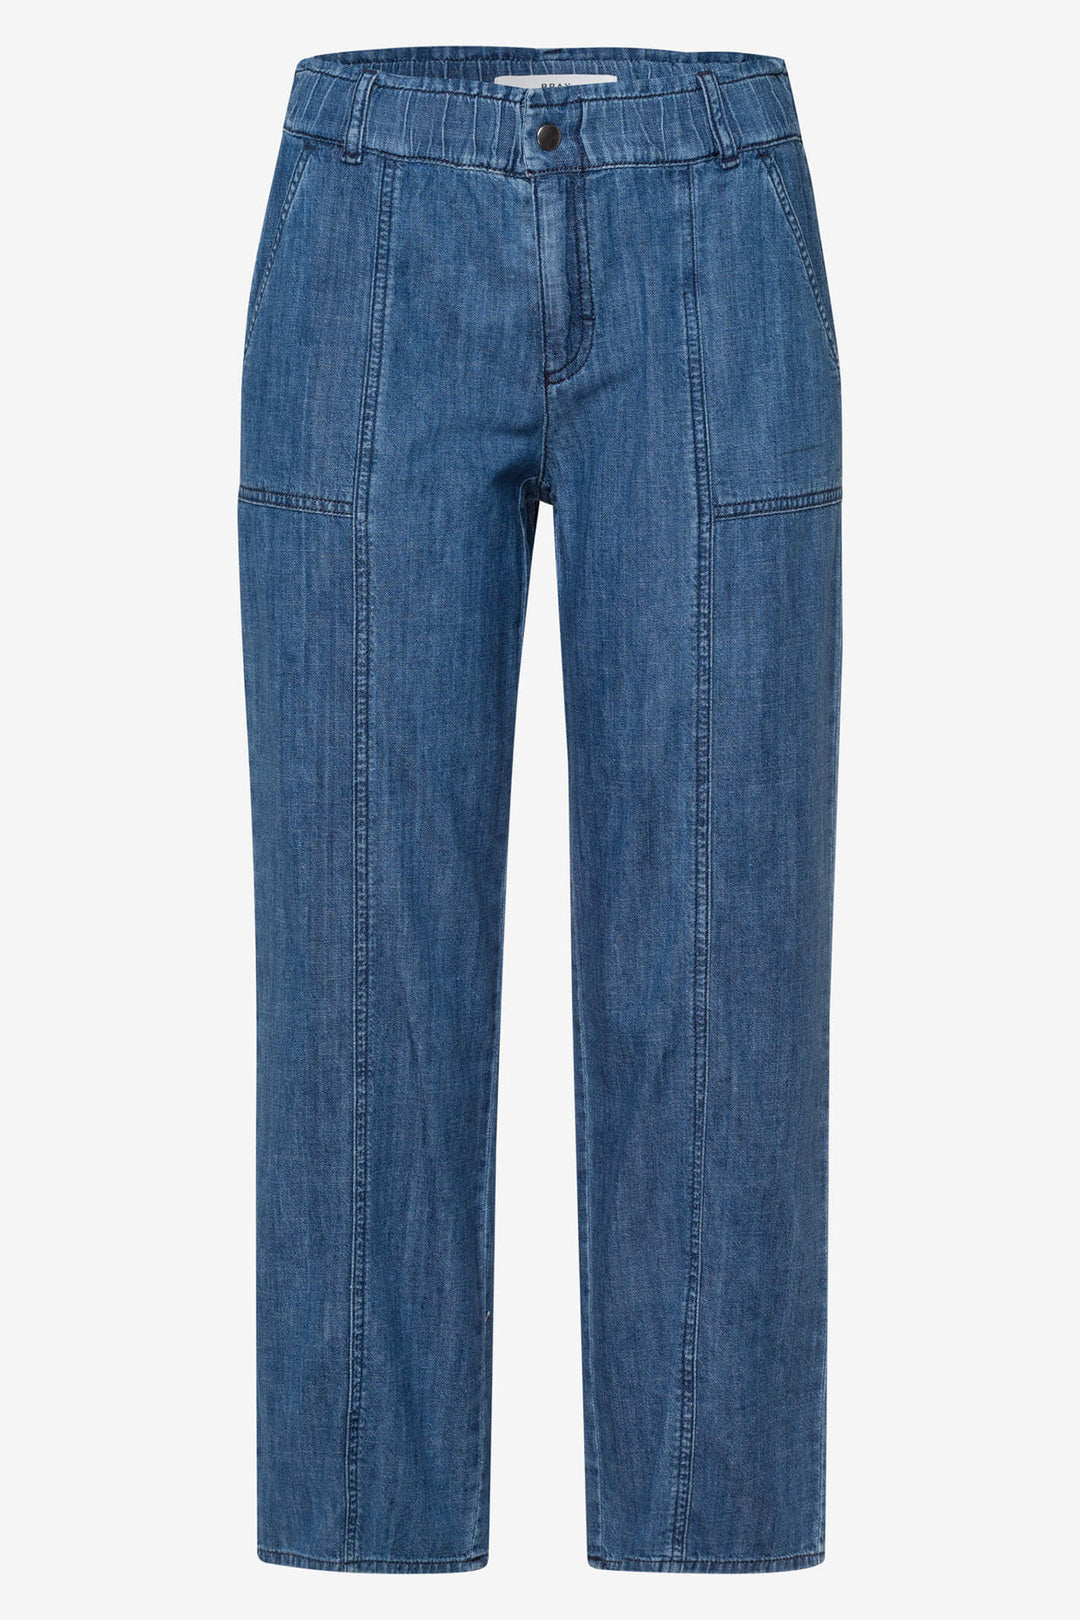 Brax Maine S 74-7847-27 7/8 Blue Jeans - Shirley Allum Boutique